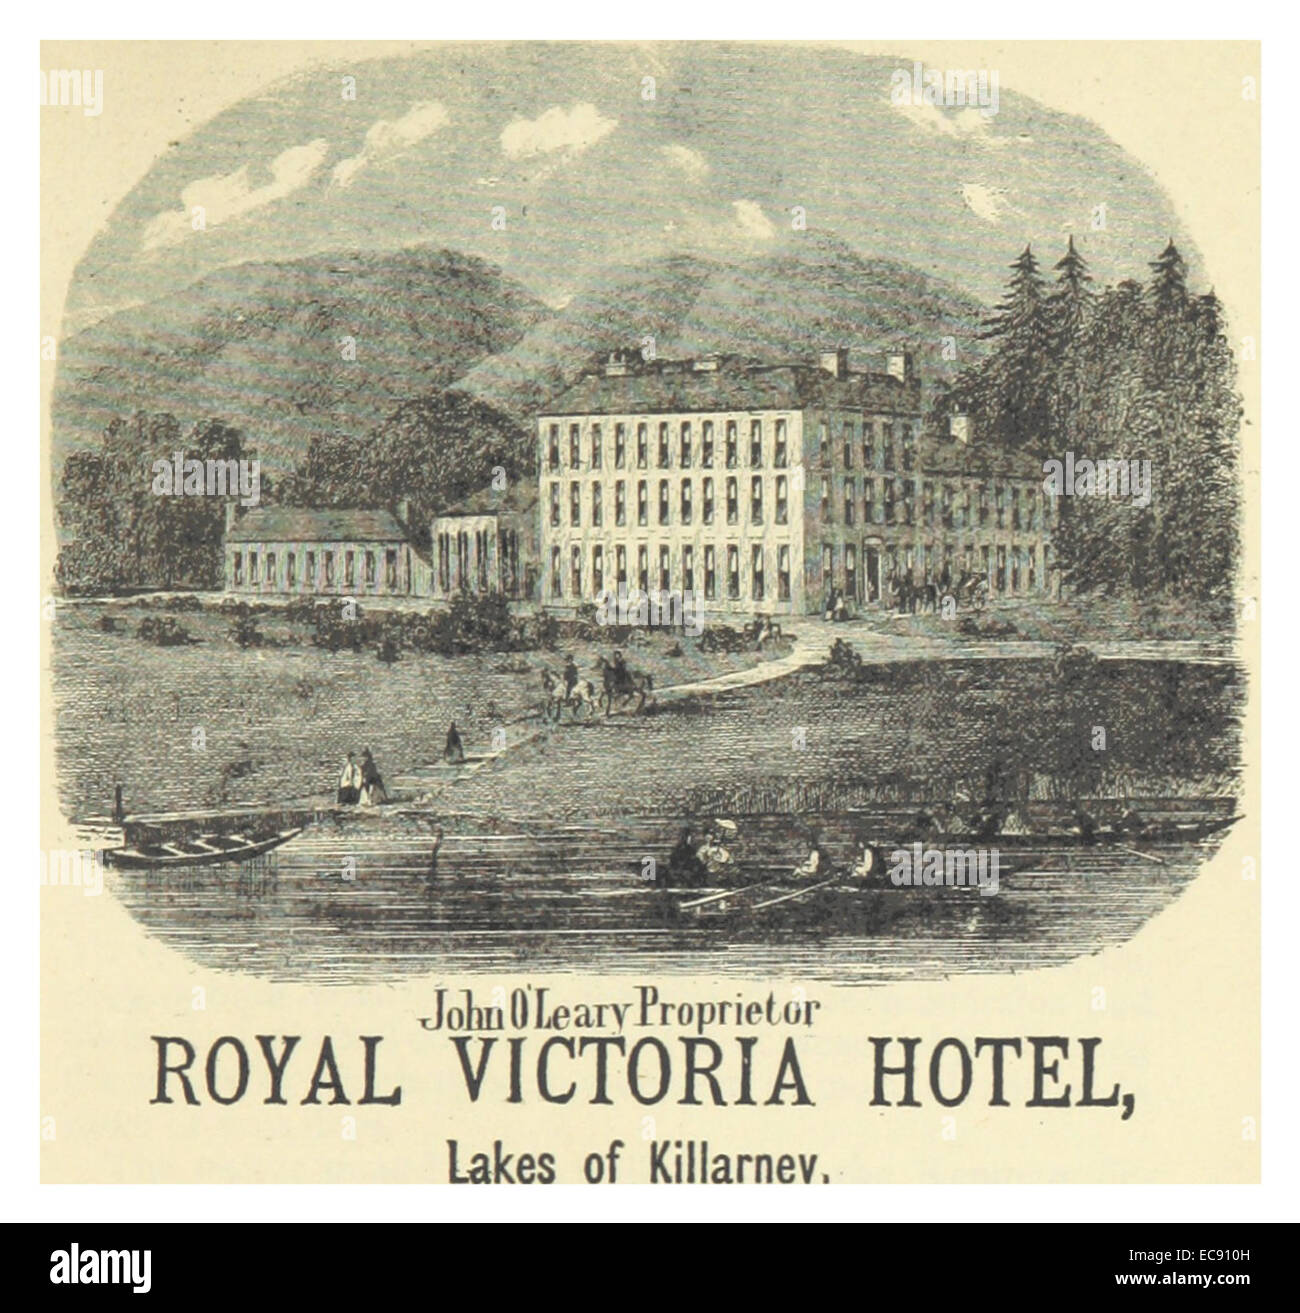 GODKIN&WALKER(1871) p343 LAKES OF KILLARNEY - ROYAL VICTORIA HOTEL Stock Photo